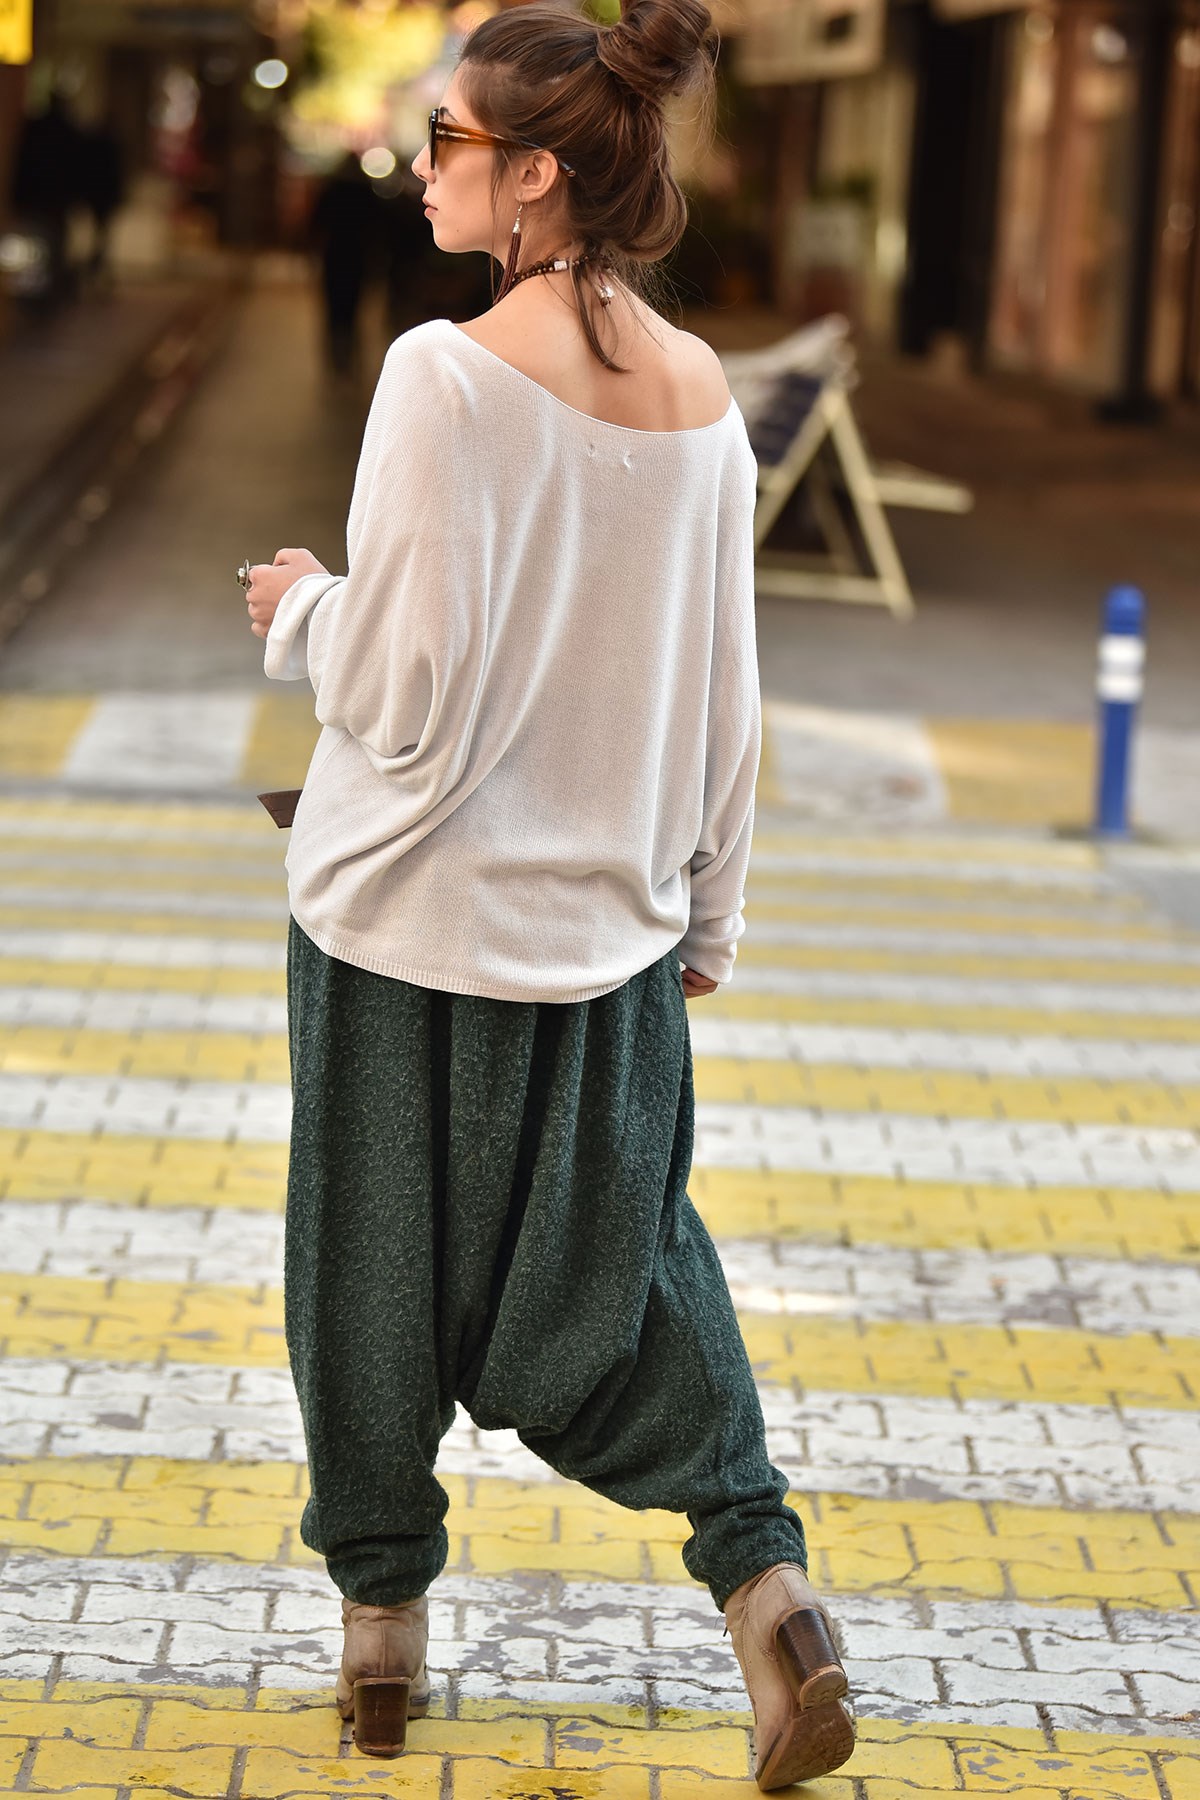 15 Best Tips on How to Wear Harem Pants for Women - FMag.com